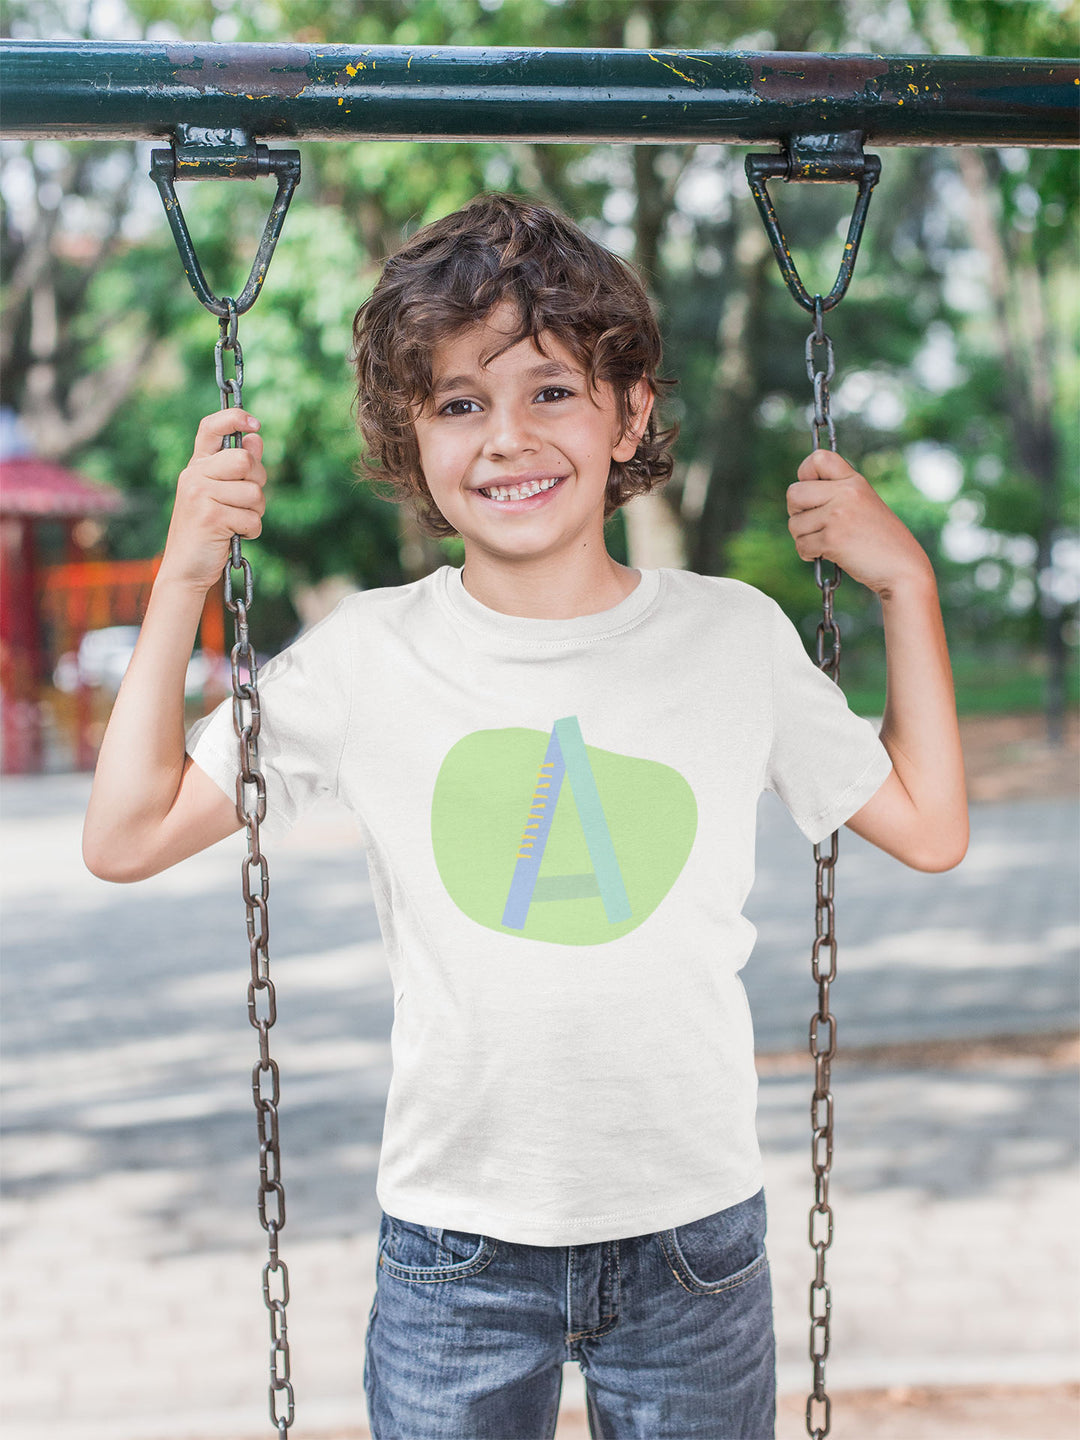 A Letter Alphabet Blue Light Green. Short Sleeve T-shirt For Toddler And Kids.